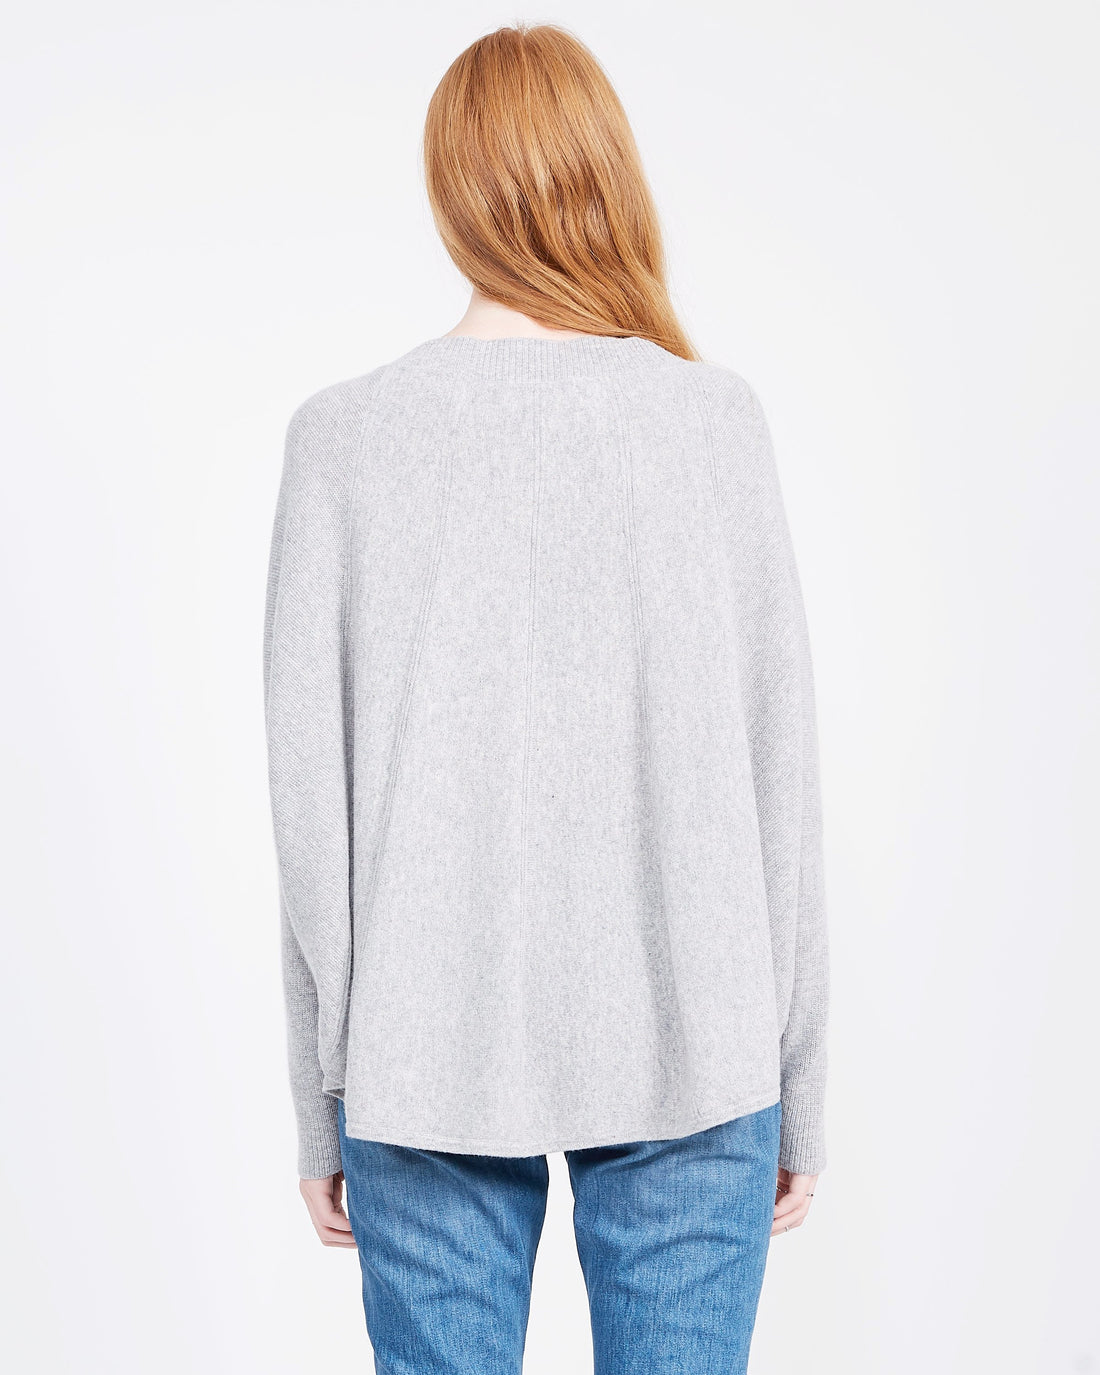 Women's cashmere long sleeve sweater